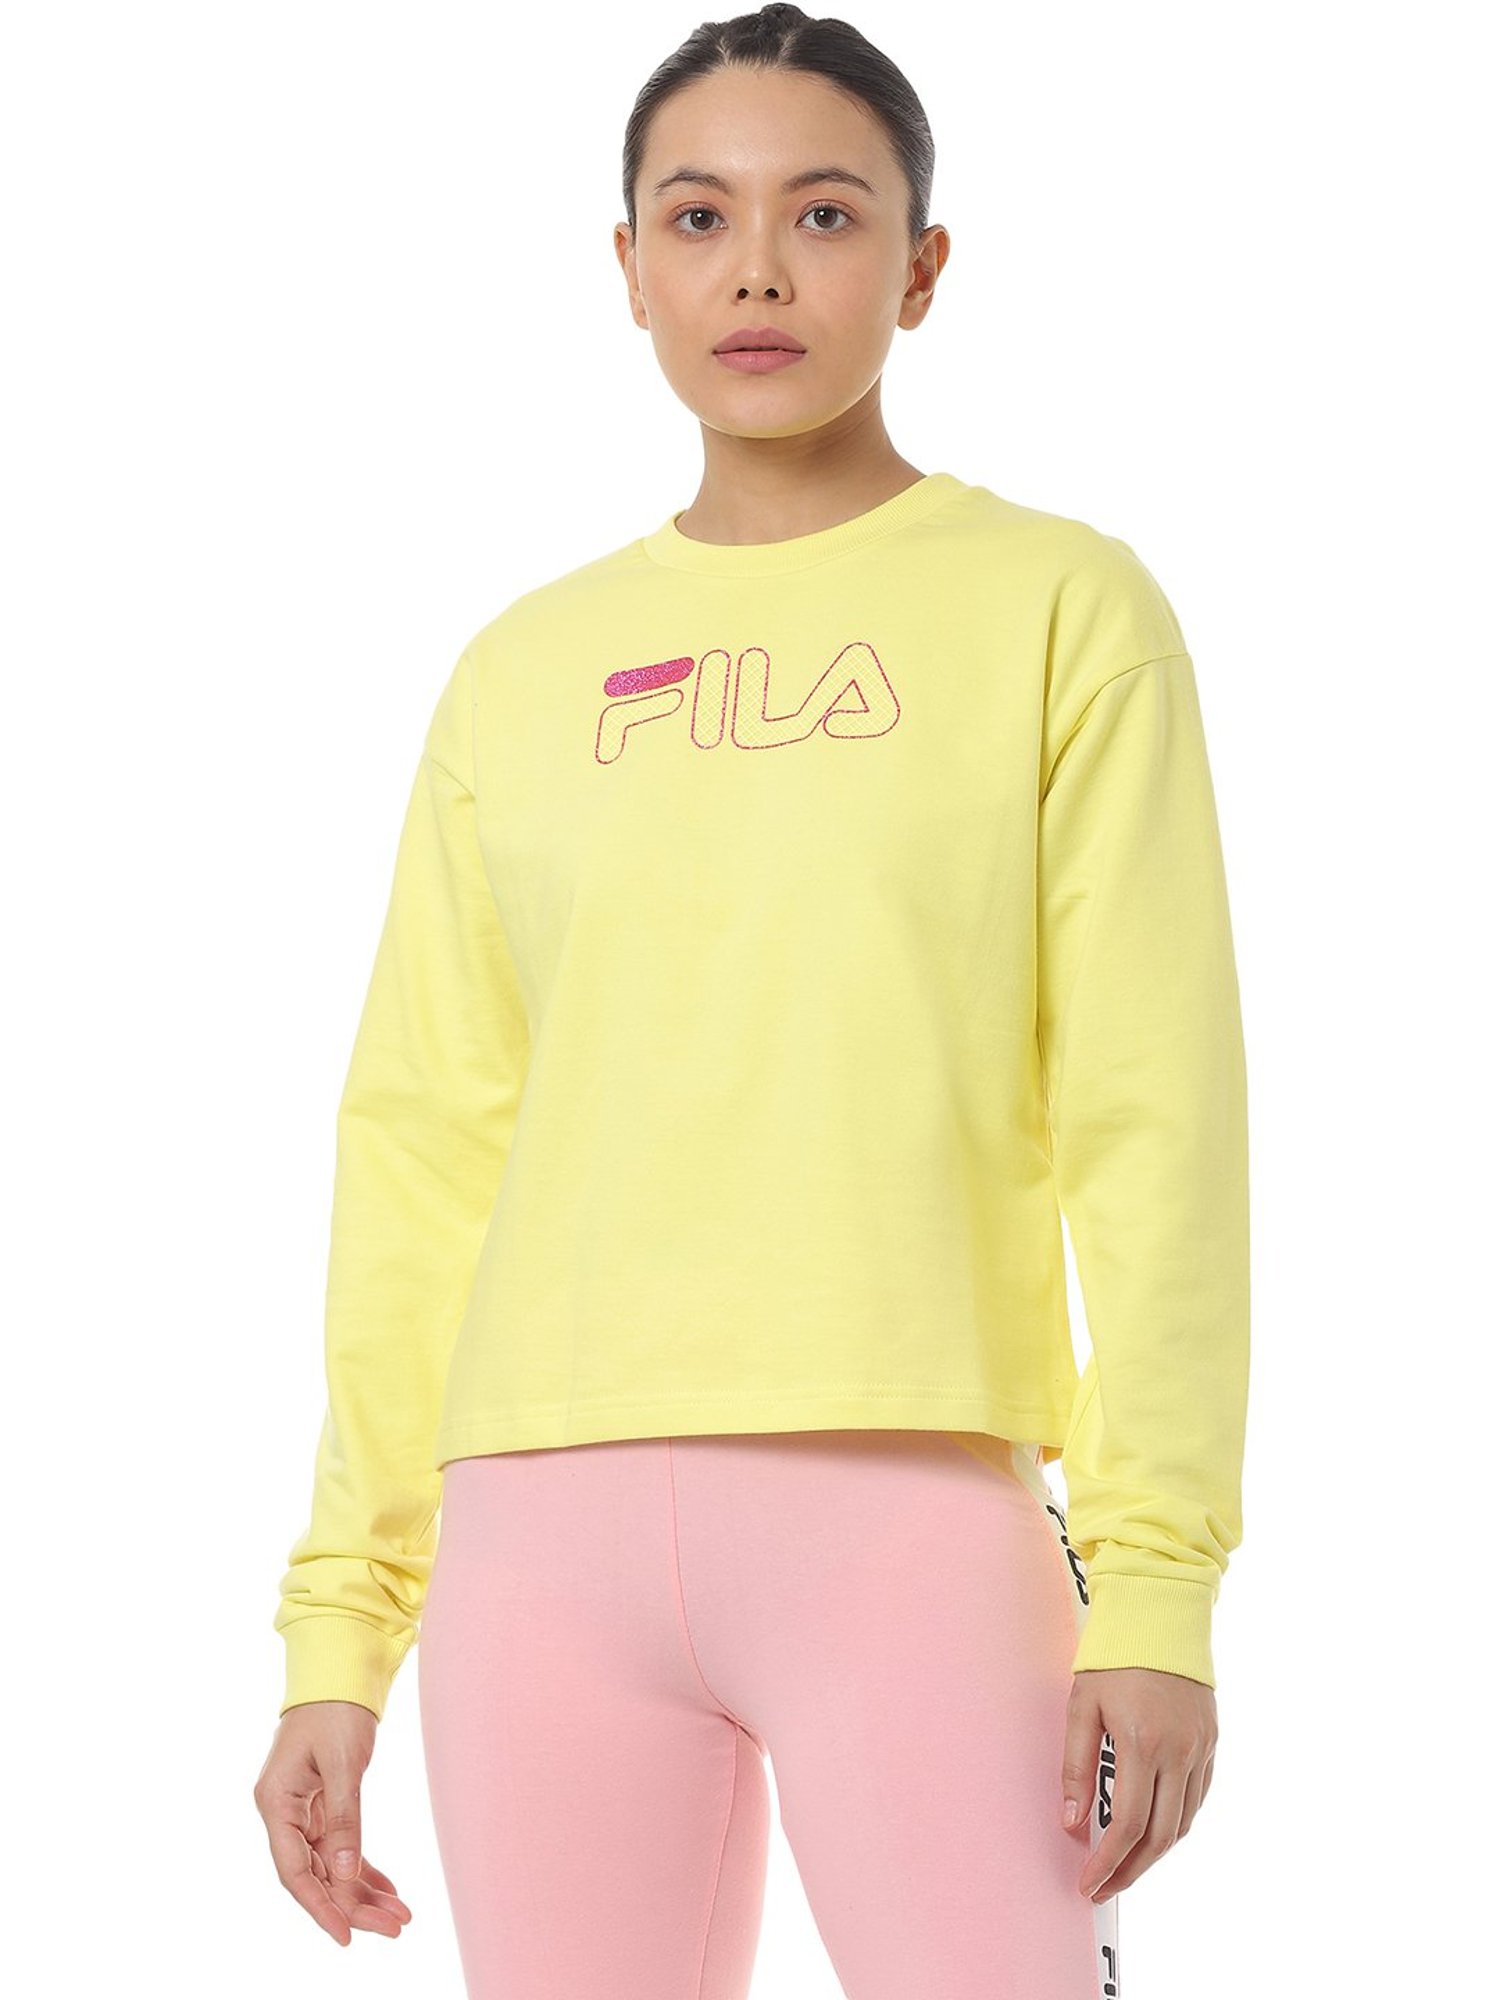 Buy Fila Yellow Neck Sweatshirt for Women's Online @ Tata CLiQ